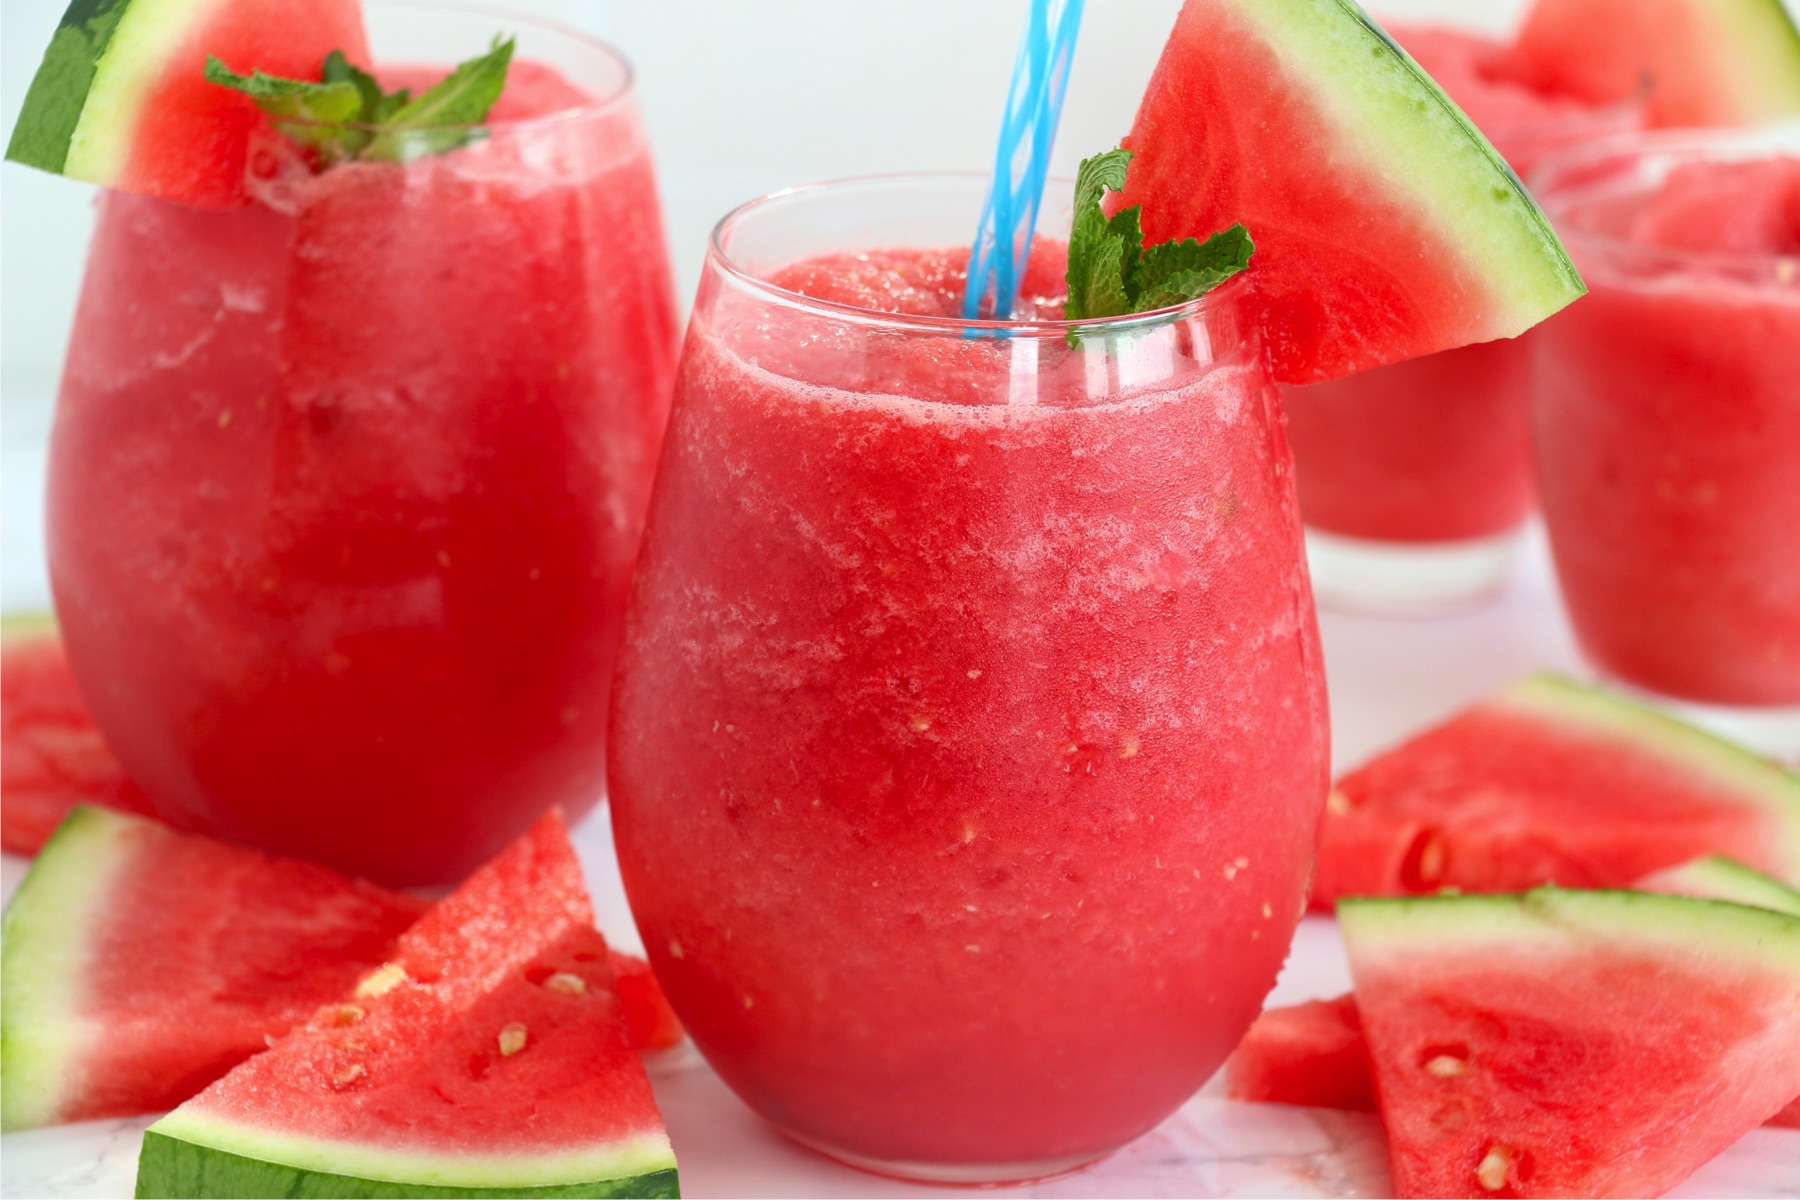 frozen watermelon drink with blue straw